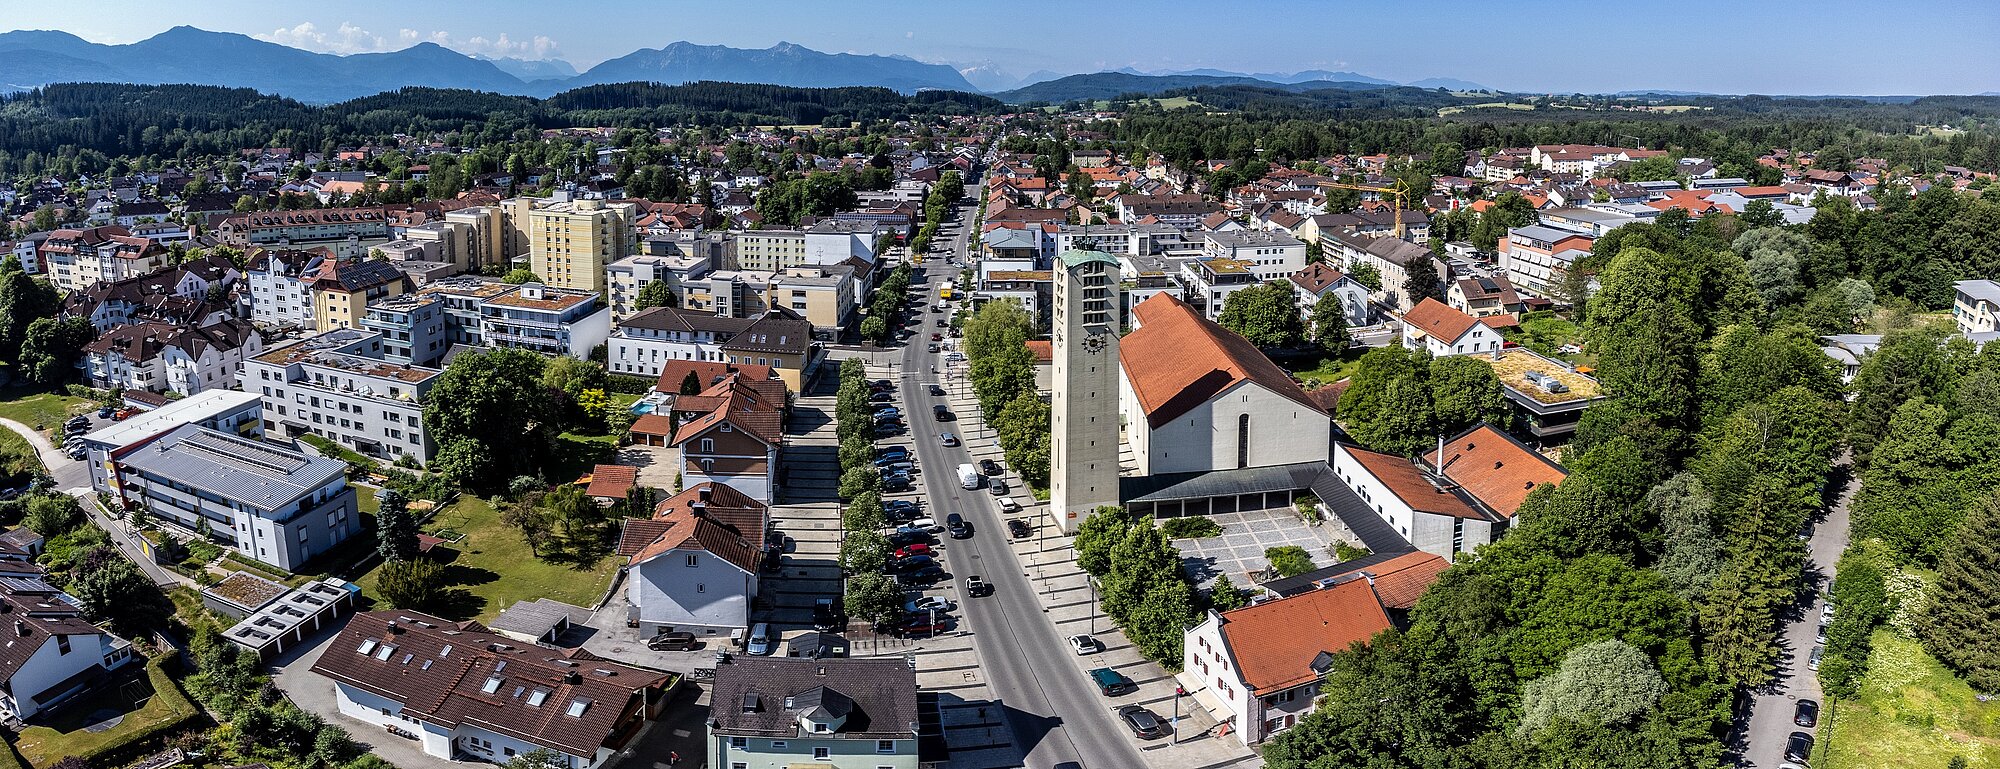 Foto: Panorama Stadt Penzberg